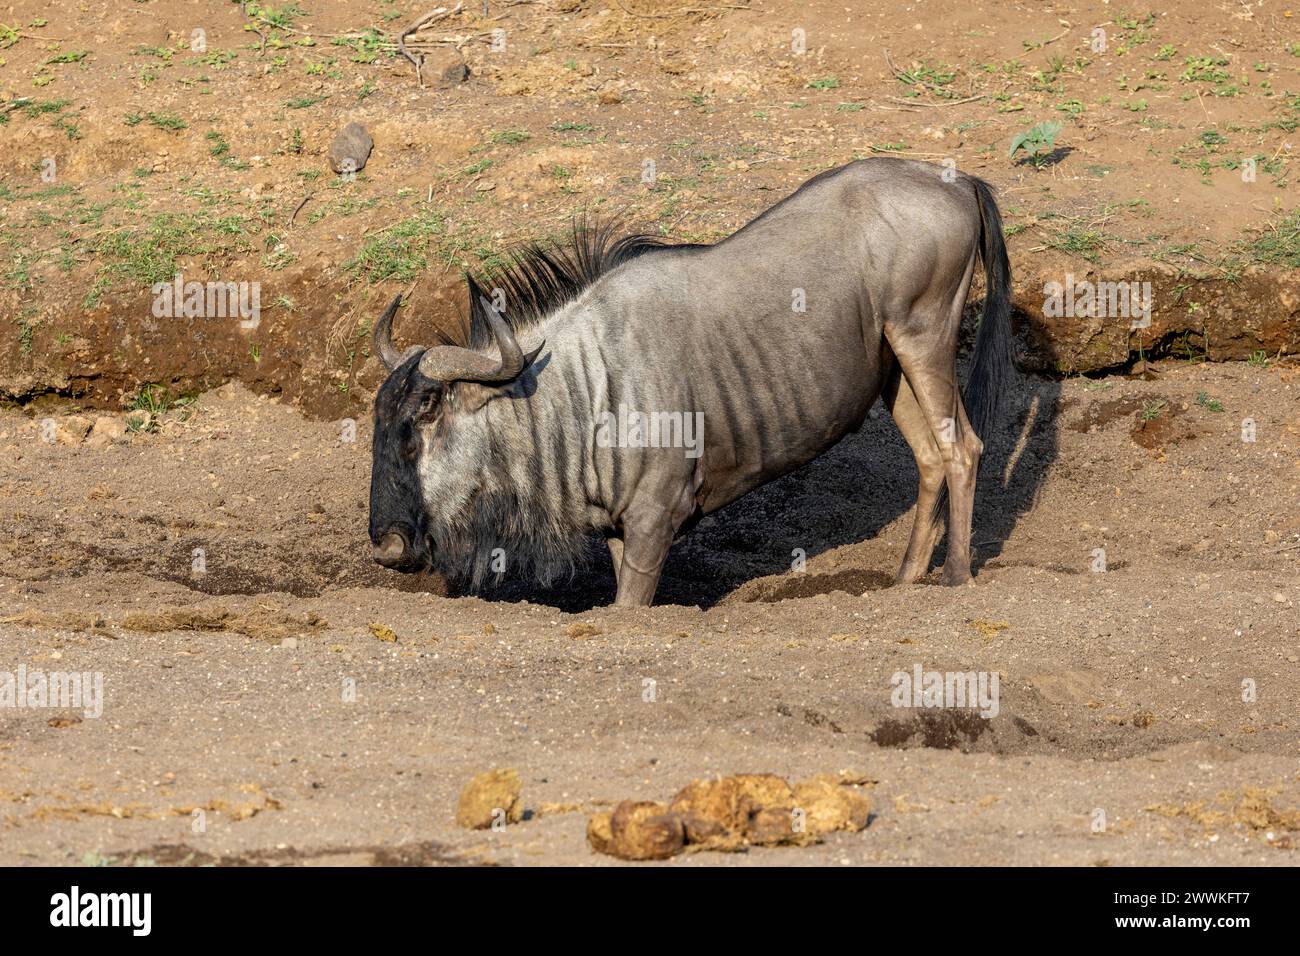 Wildebeest digging in the dirt in Botswana, Africa Stock Photo